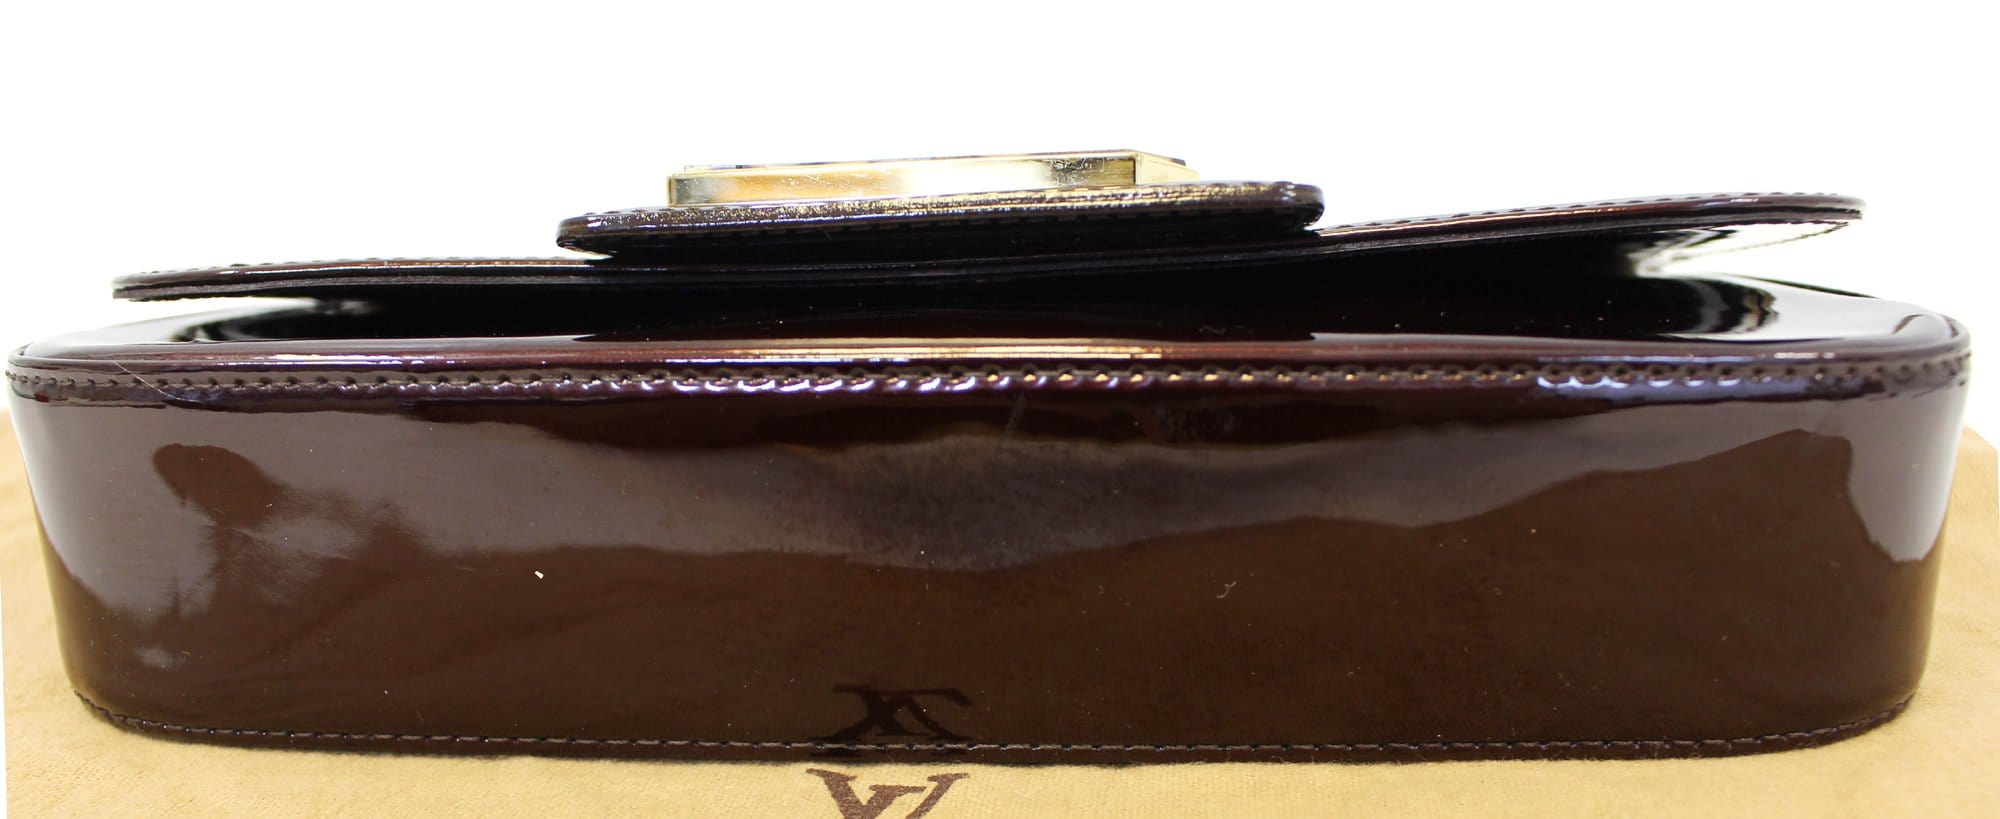 LOUIS VUITTON Sobe Pochette Vernis Leather Clutch Bag Bronze